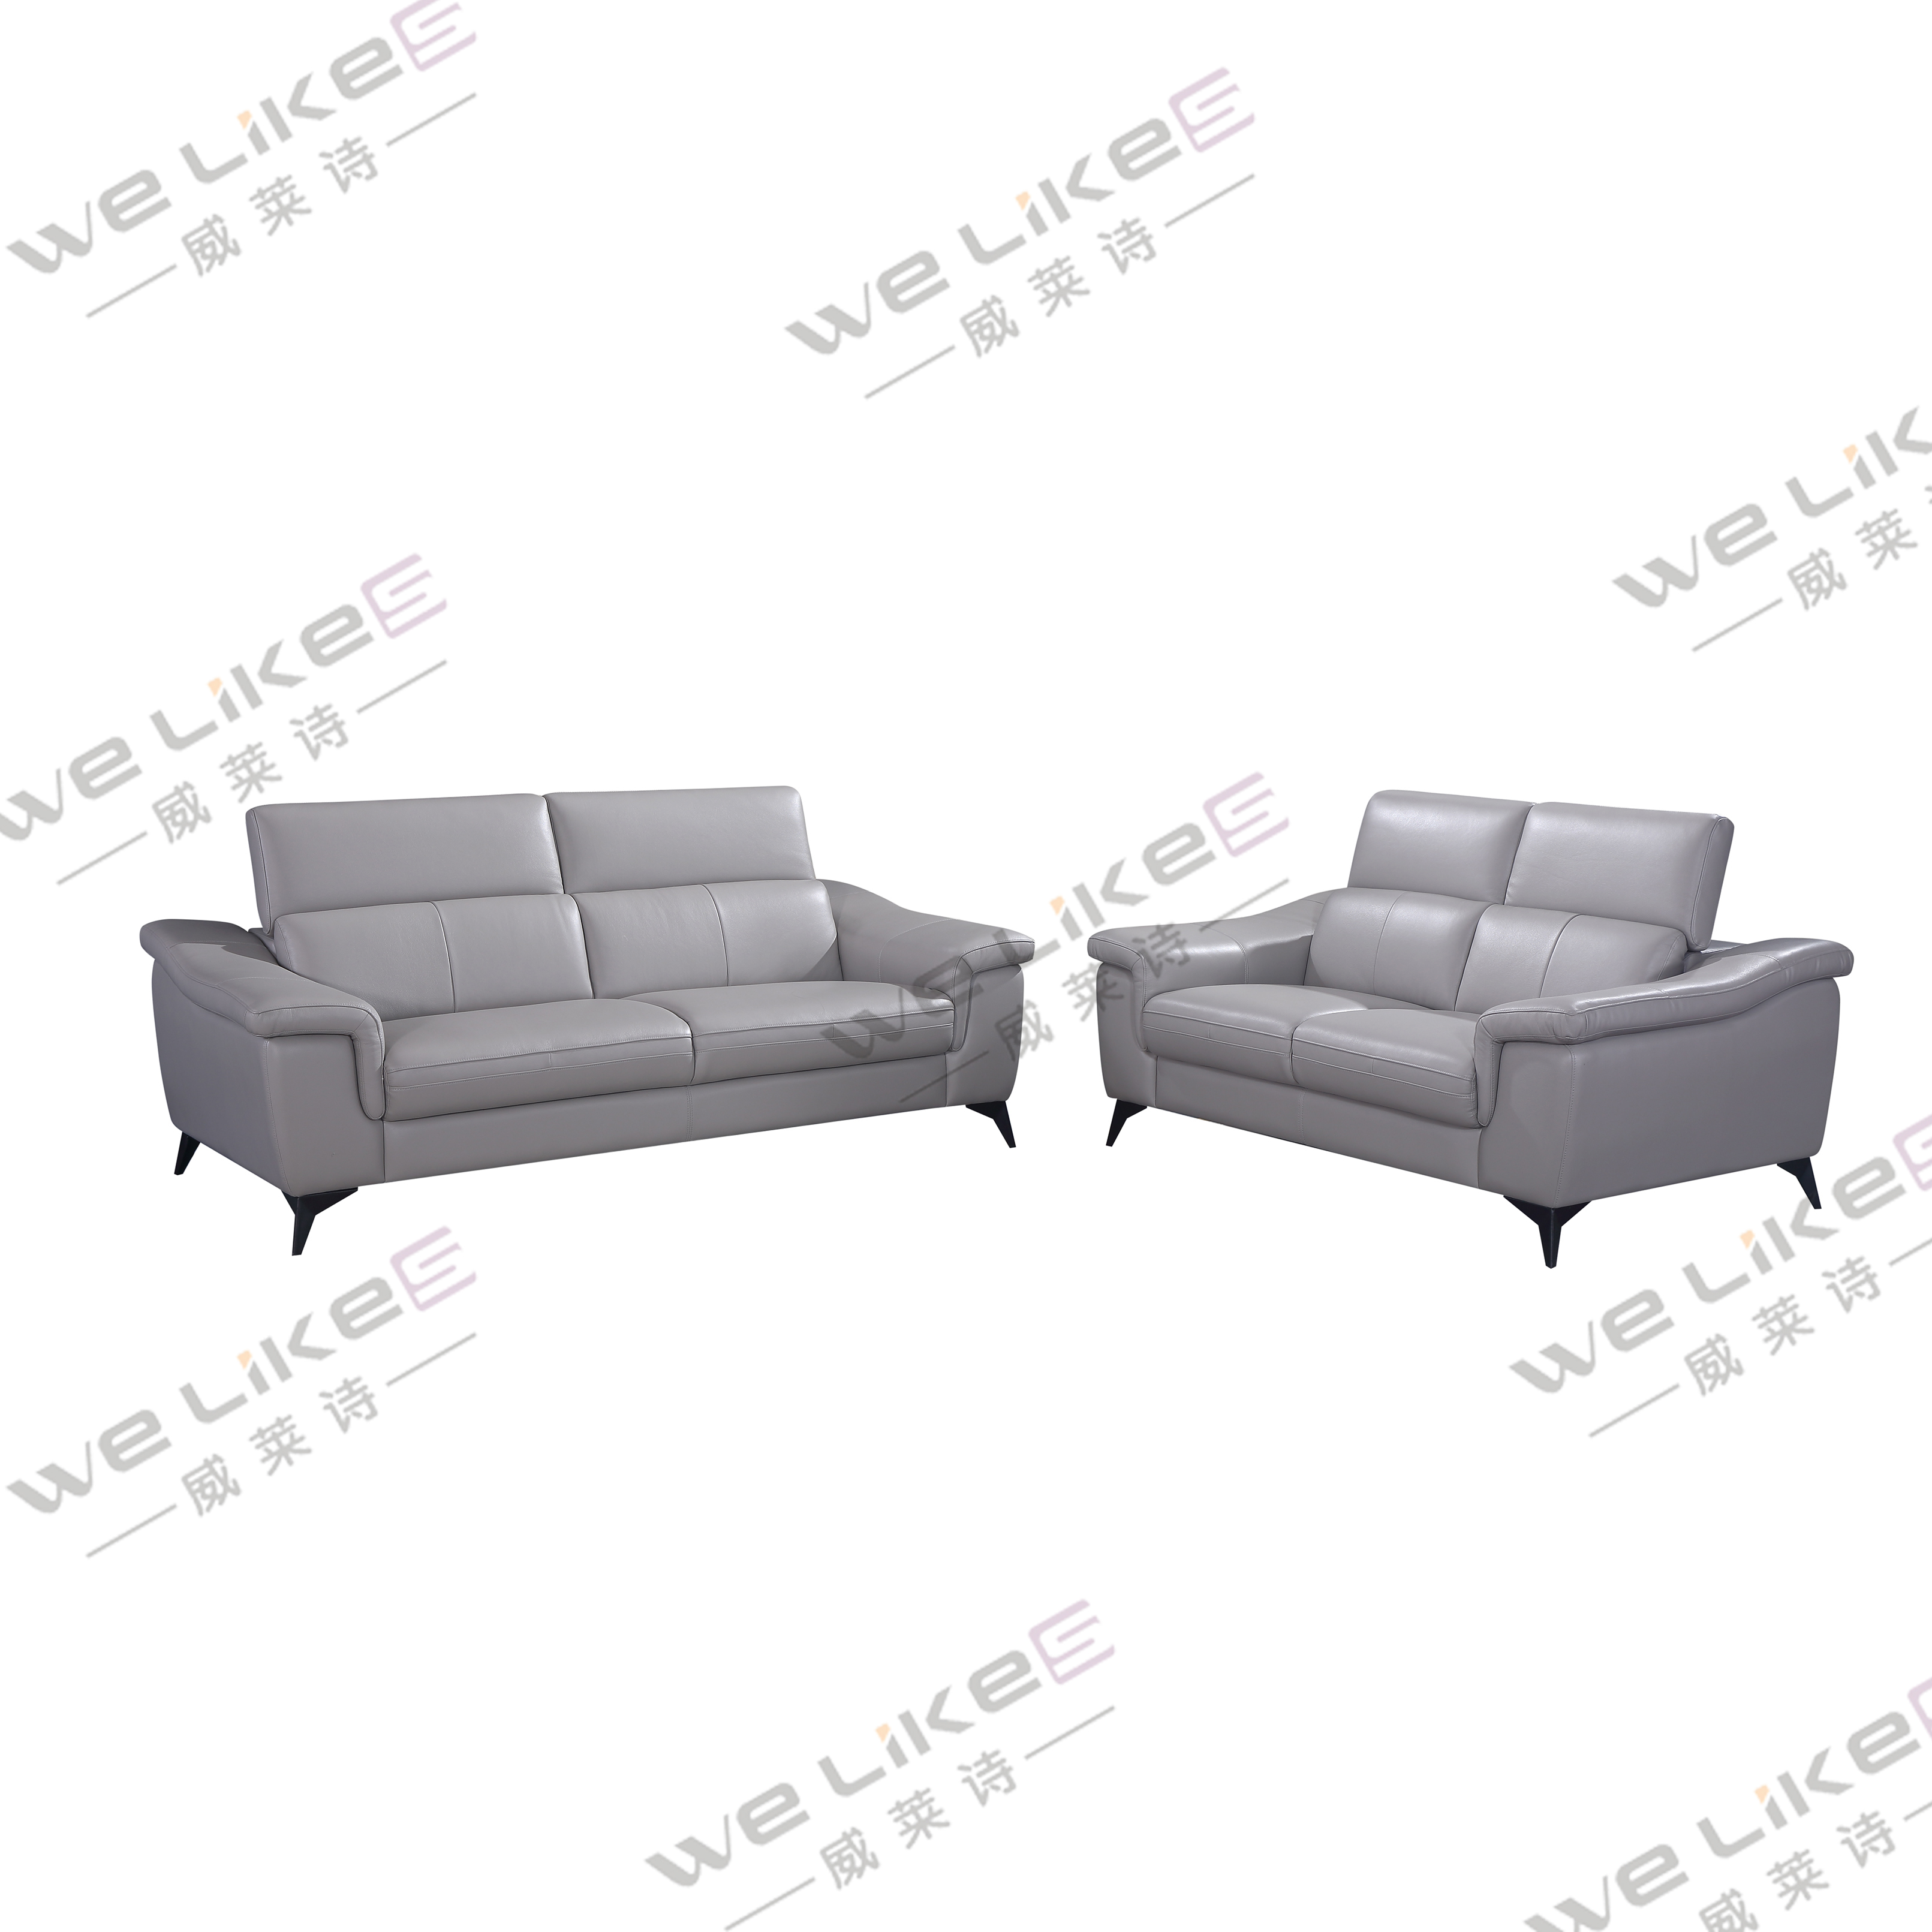 ZM738 Welikes Modern Leather Sofa